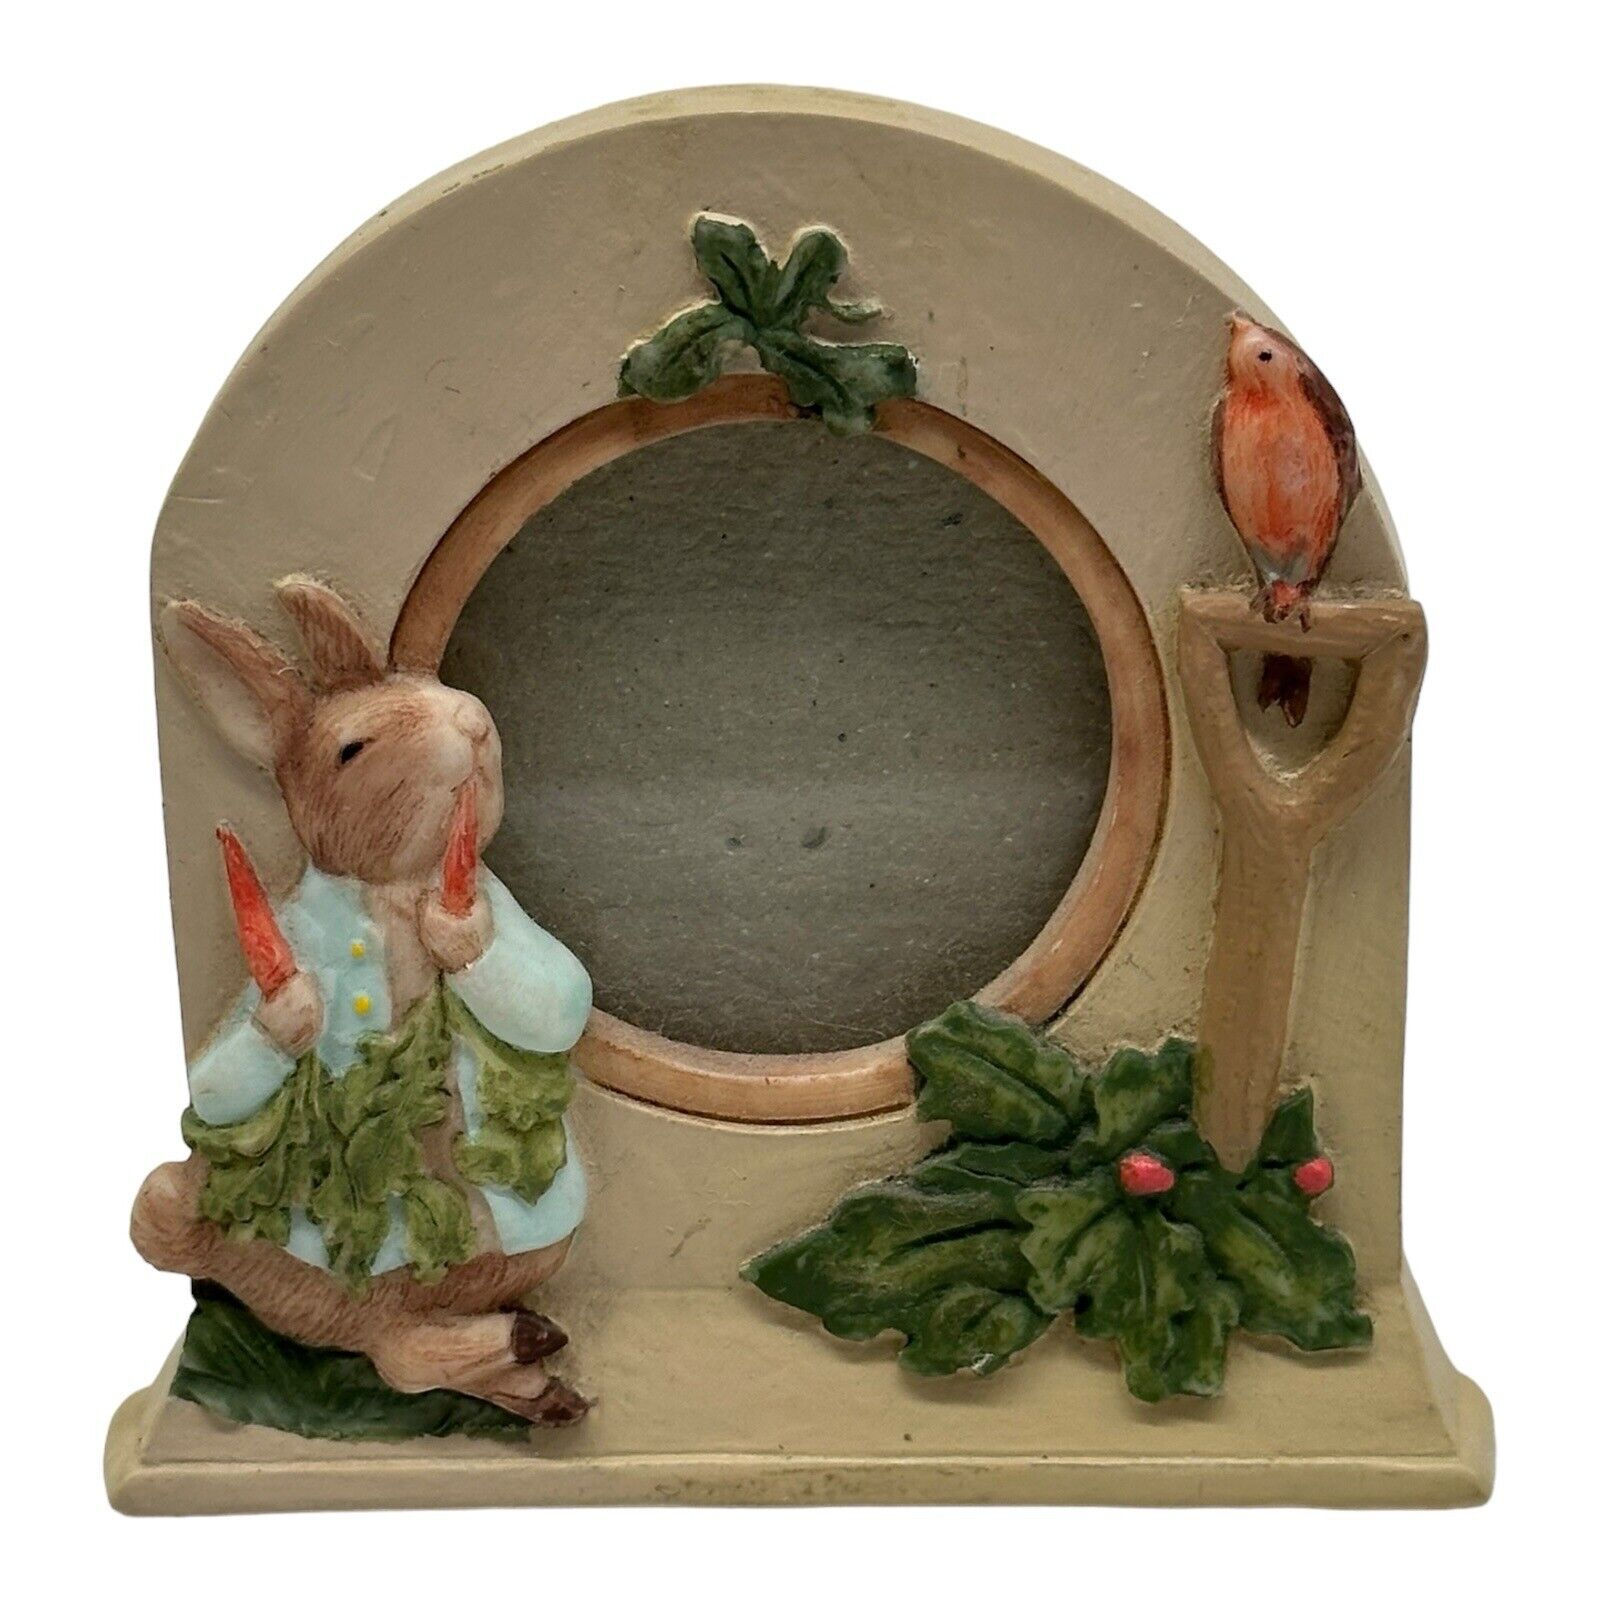 VTG Peter Rabbit Picture Frame Tales Of Beatrix Potter Charpente Nursery Disney